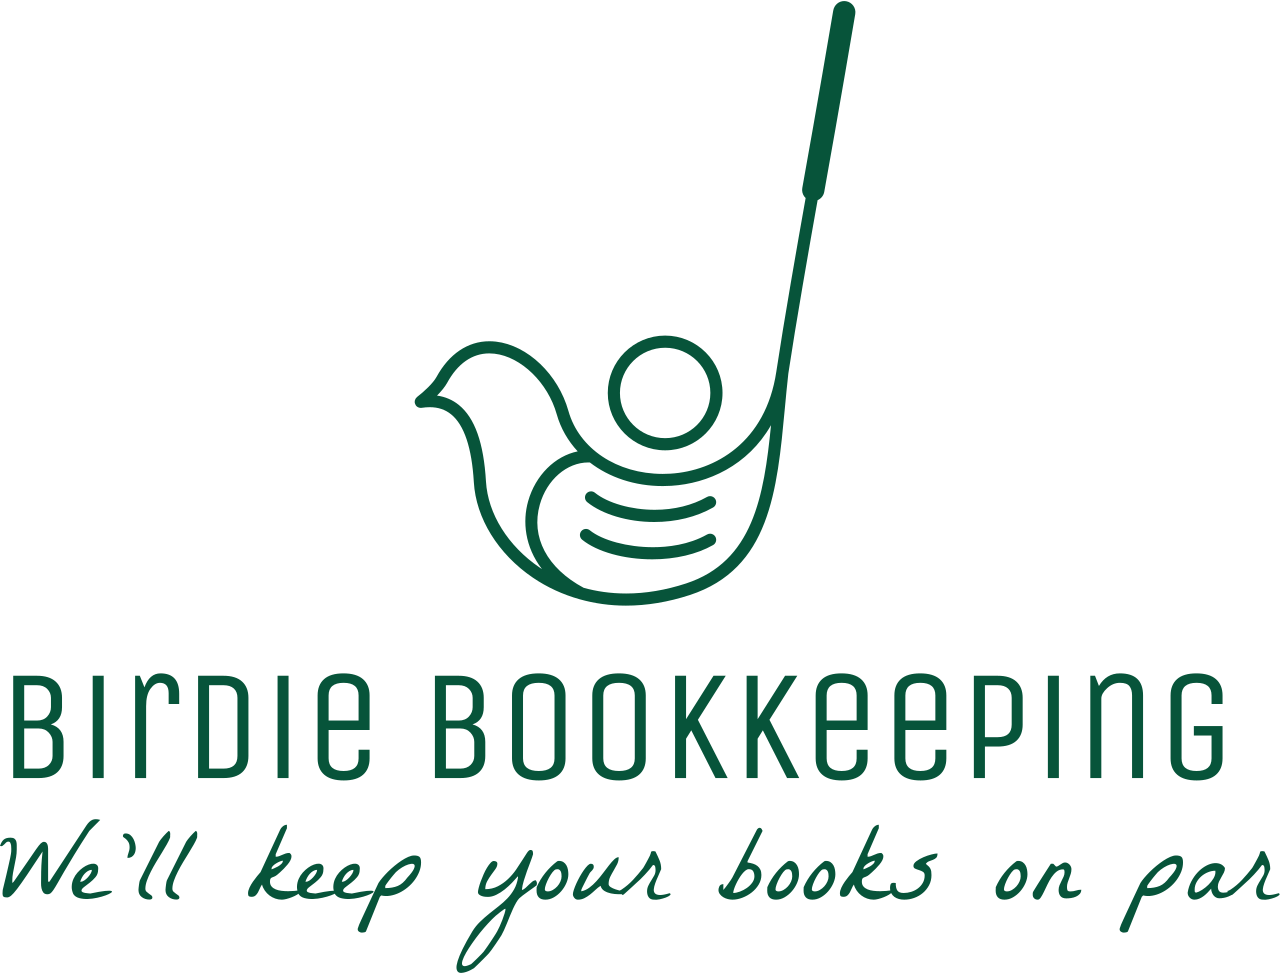 Birdie Bookkeeping 's logo